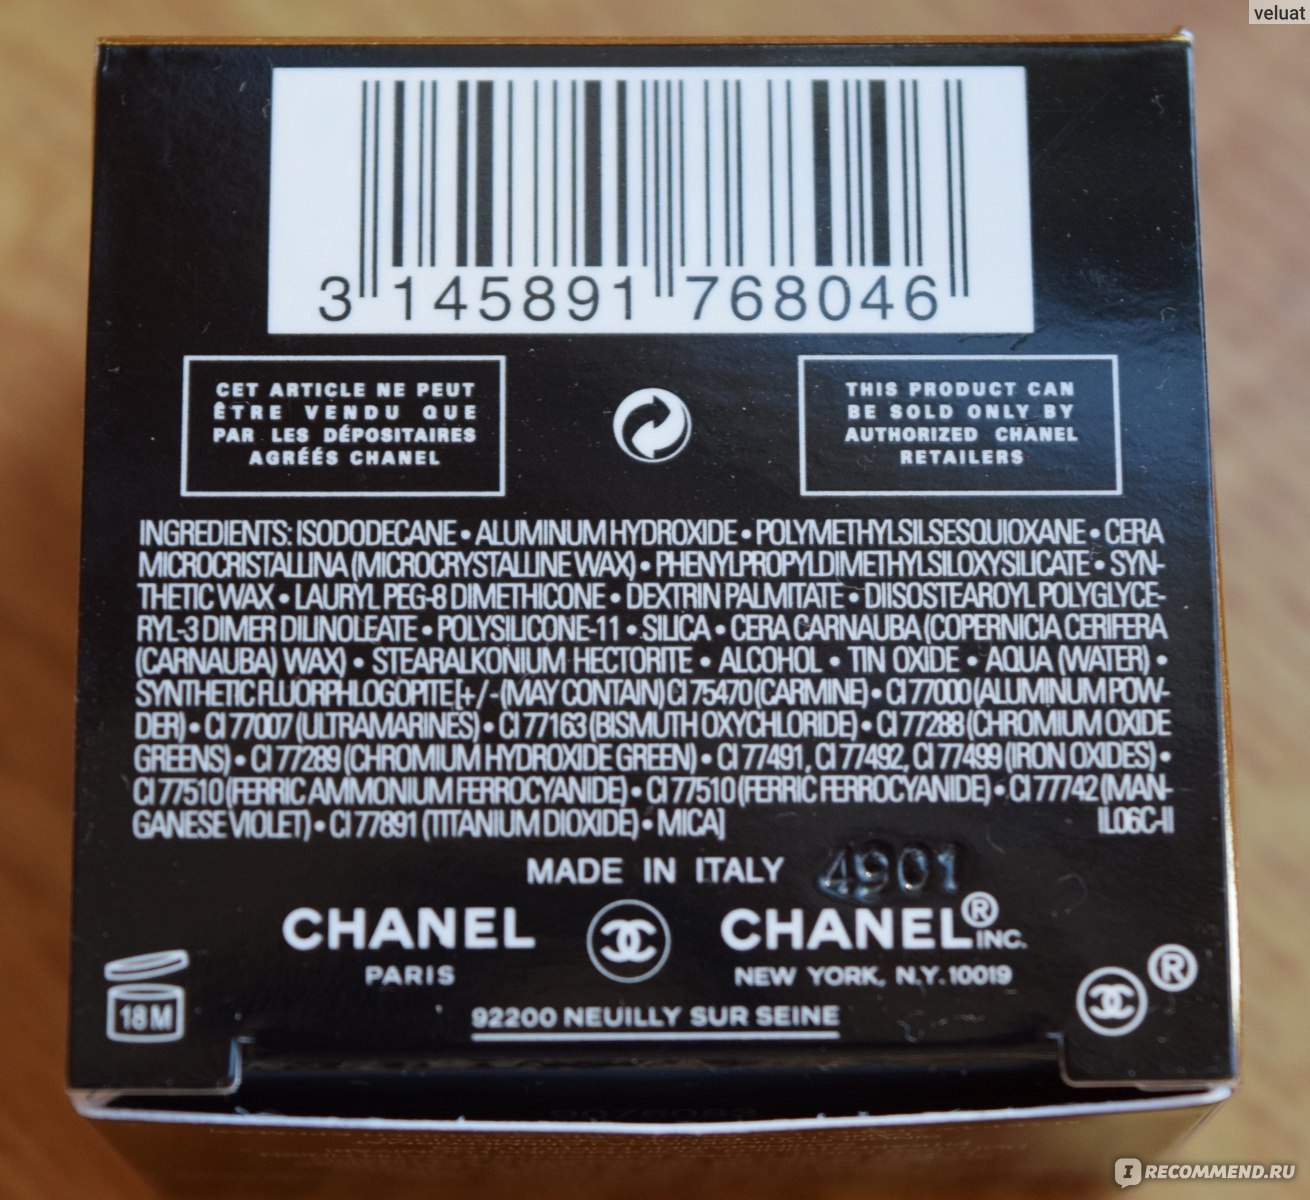 Кремовые тени  для век Chanel Ombre Premiere фото